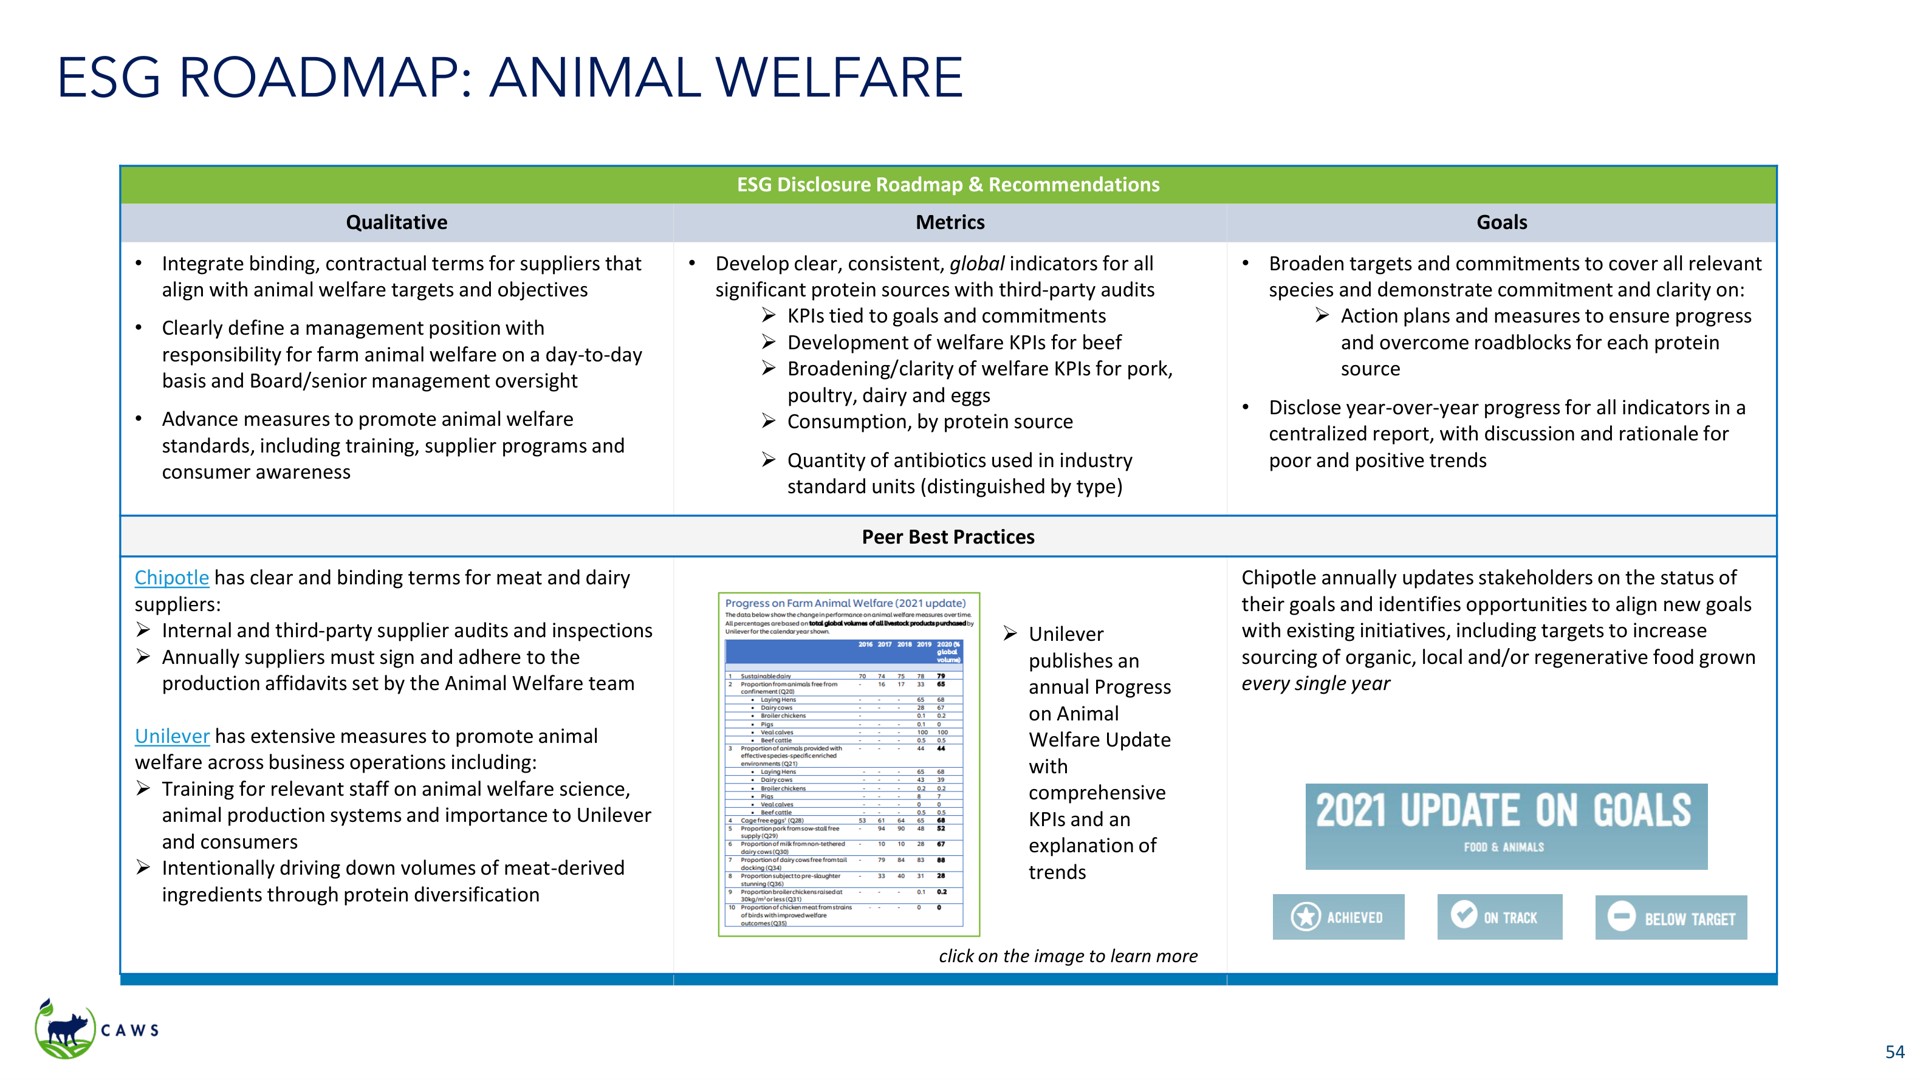 animal welfare update on goals | Icahn Enterprises